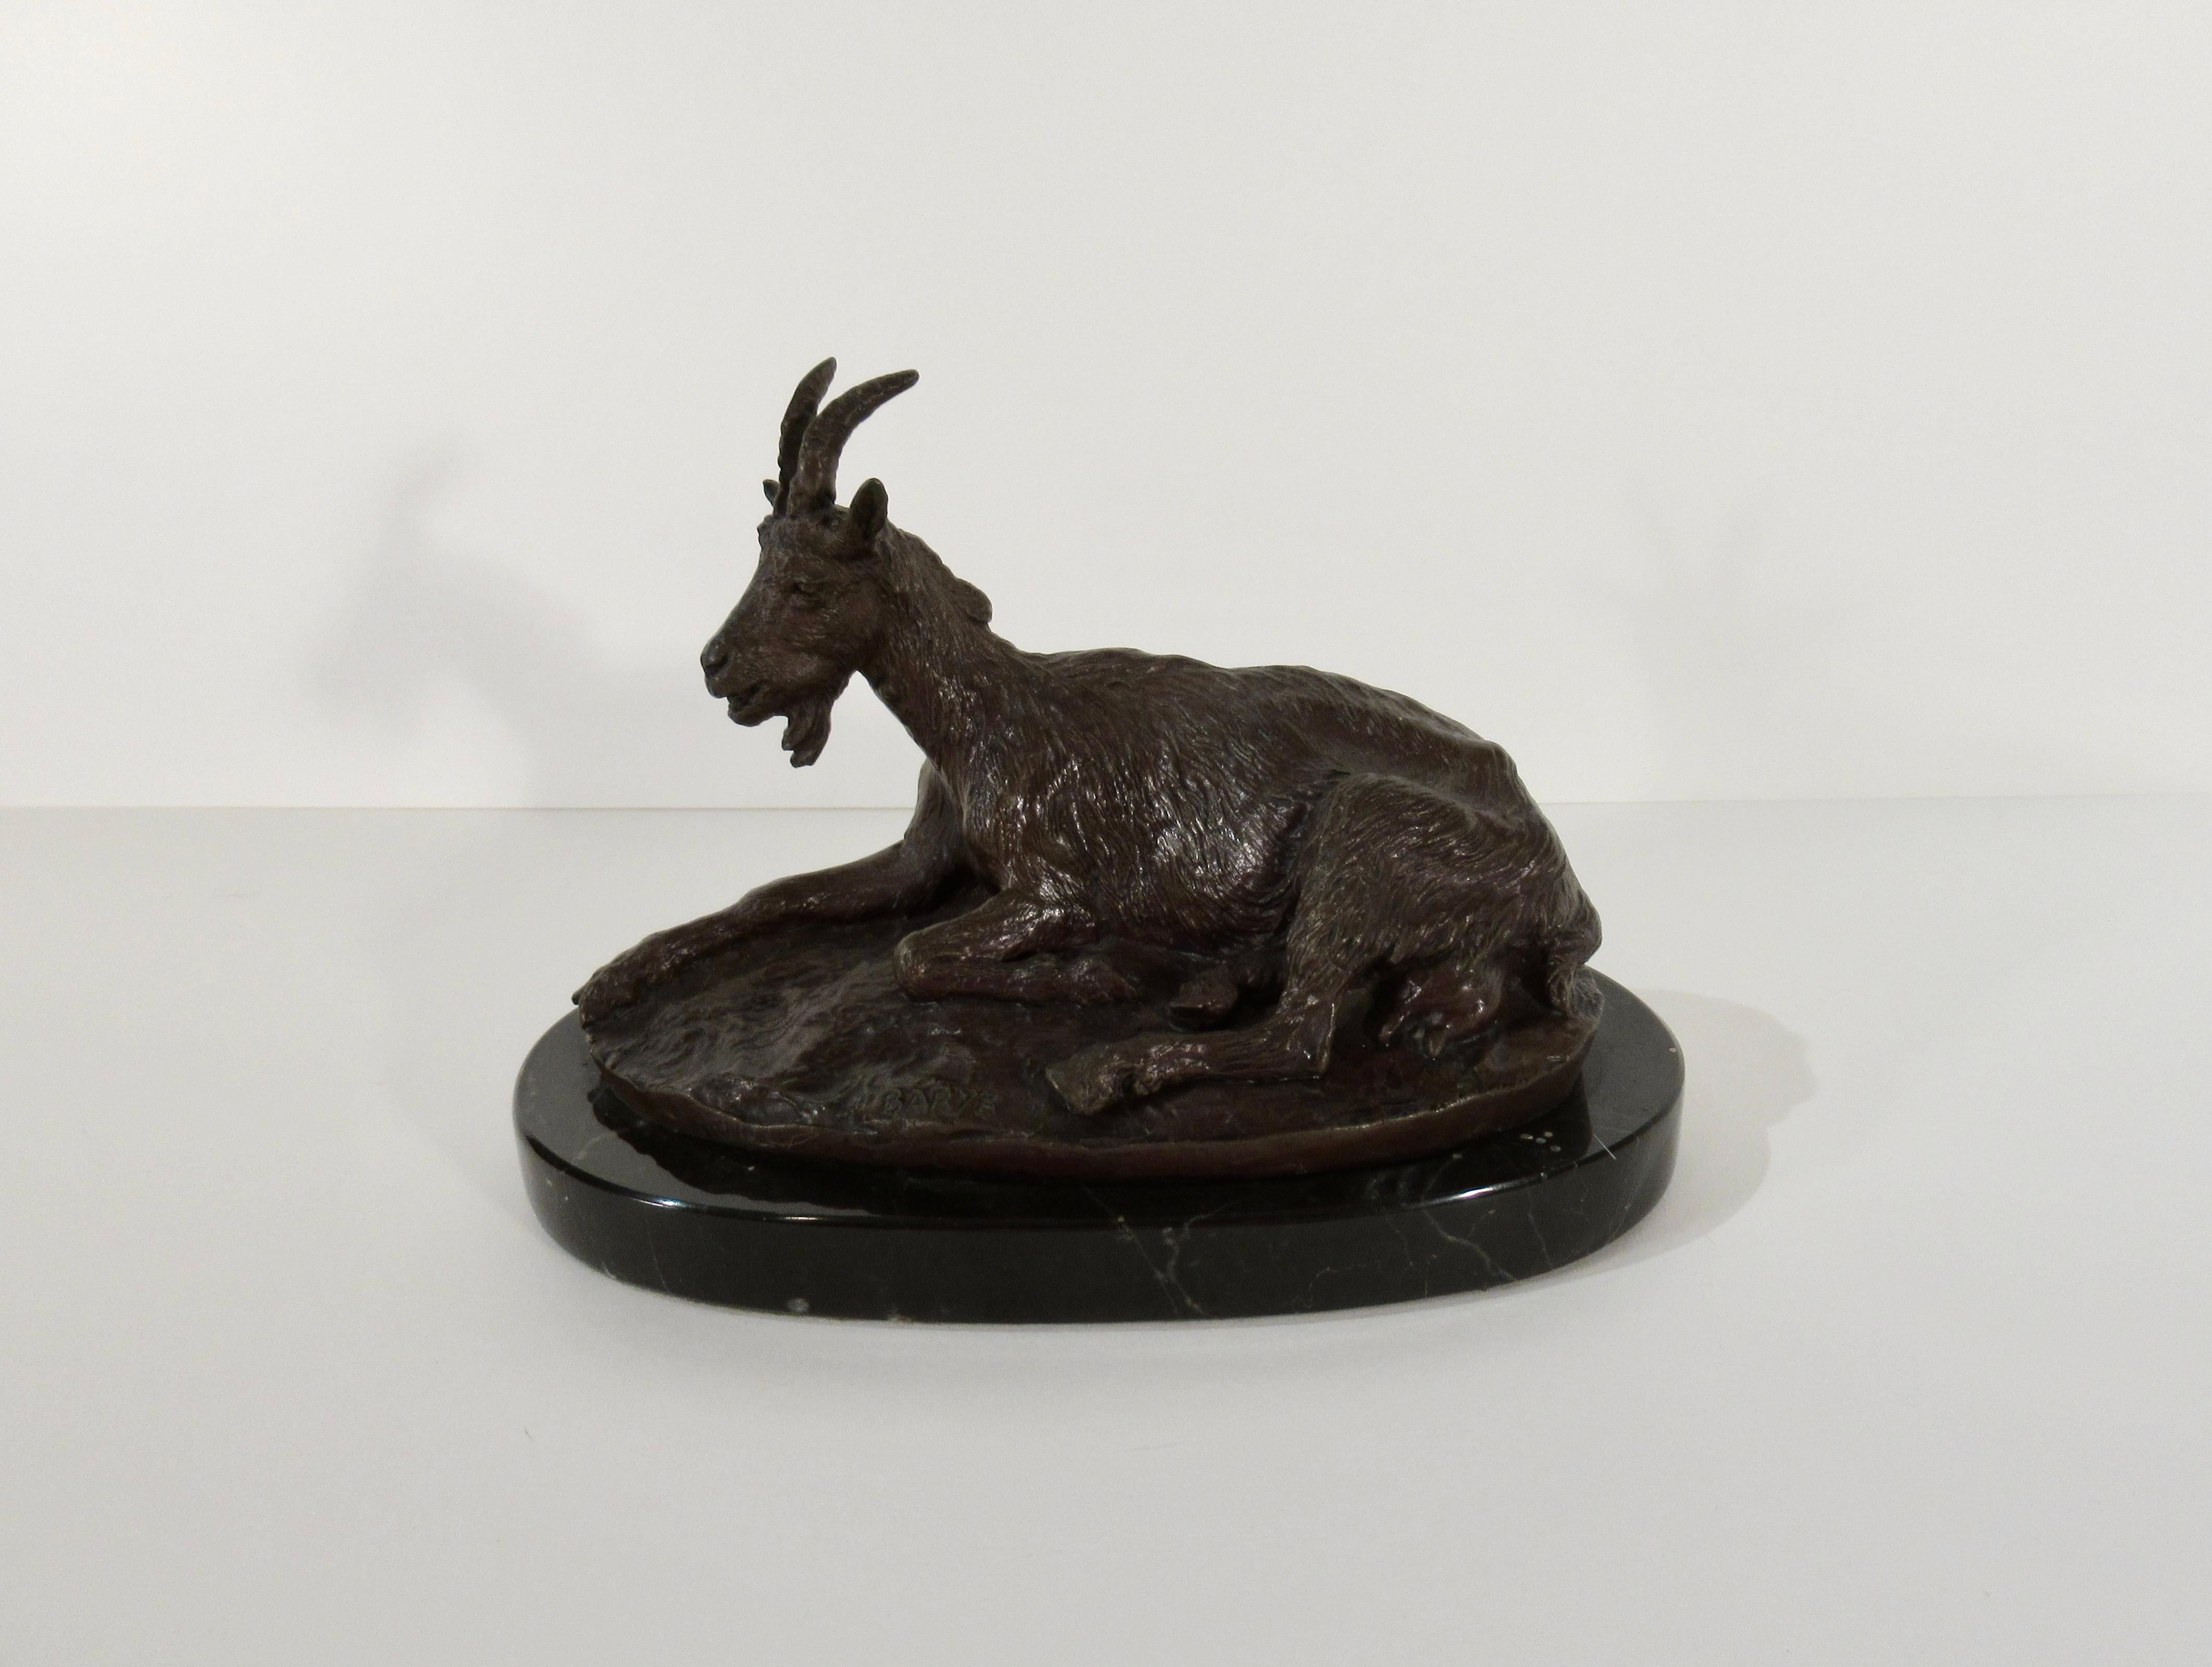 Chevre Allongee (Reclining Goat) - Sculpture by Antoine-Louis Barye